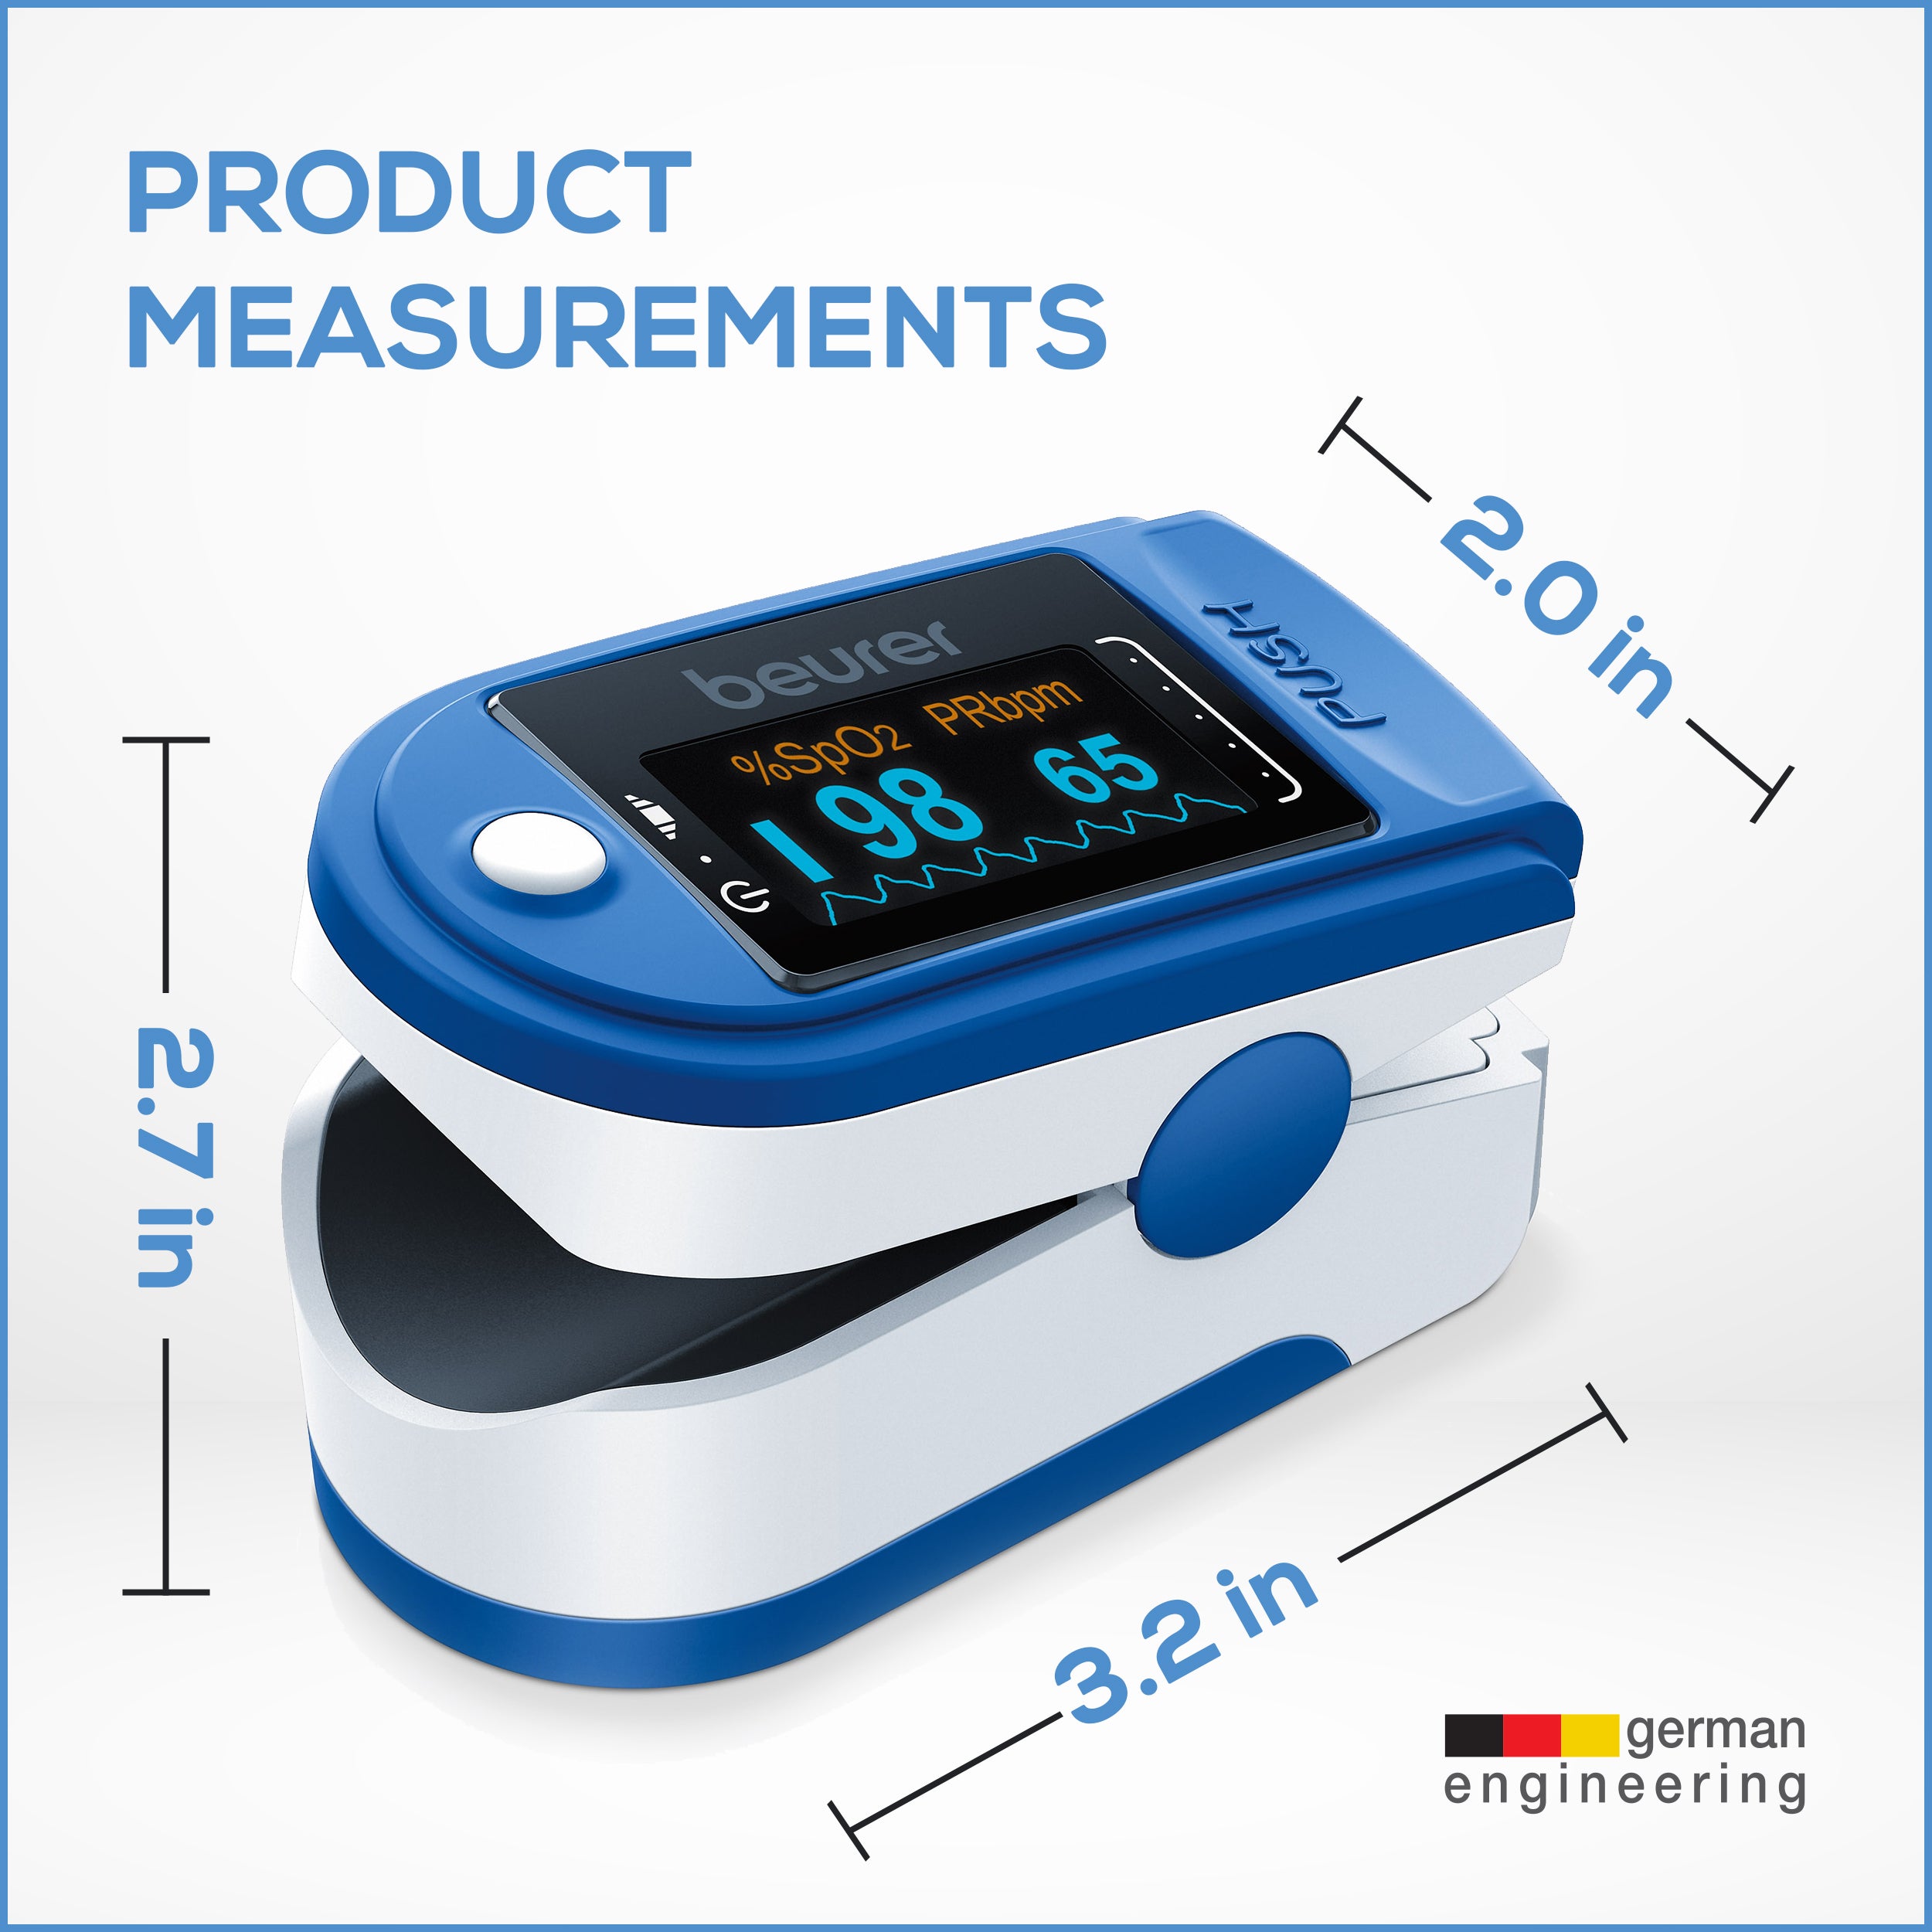 Beurer PO50 Fingertip Pulse Oximeter  dimensions